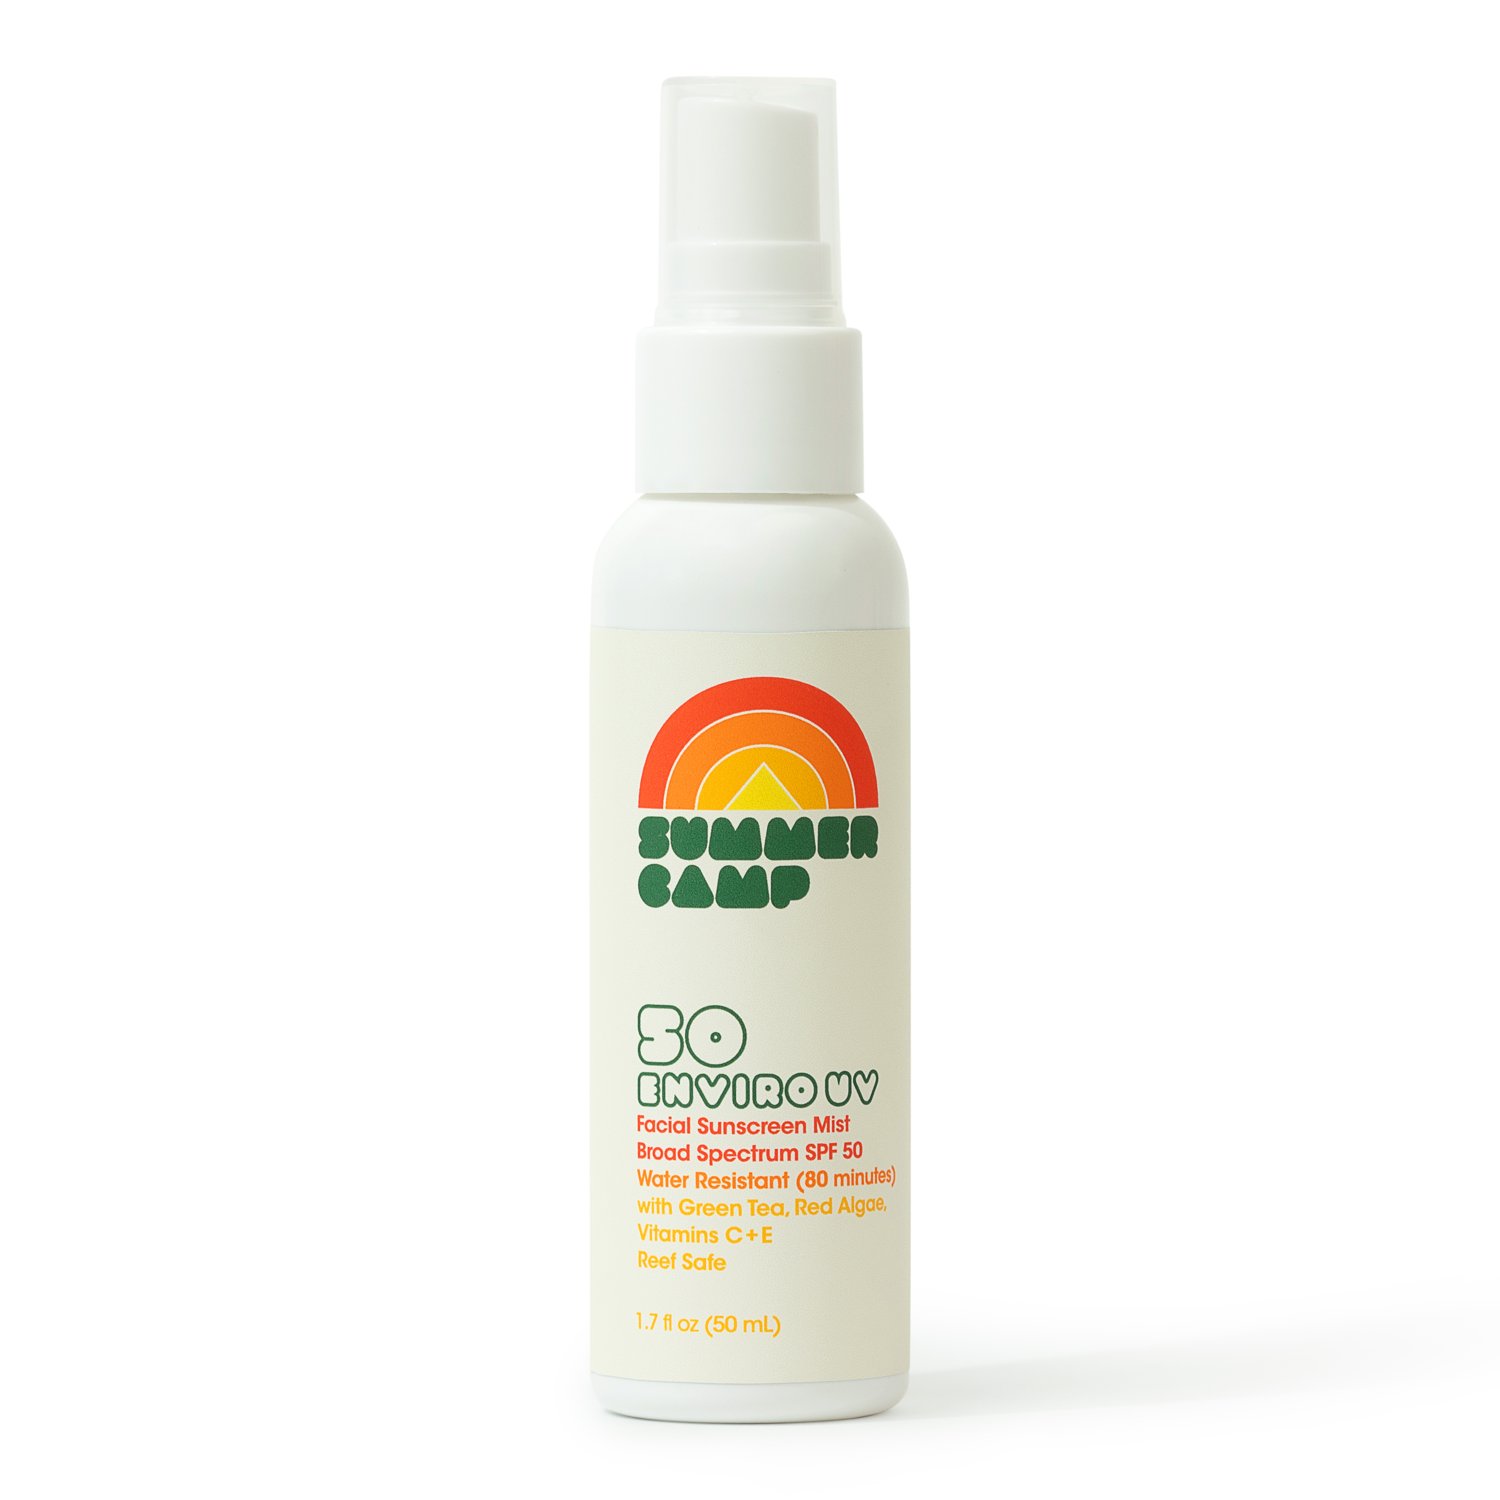 Summer Camp Enviro UV Water Resistant Sunscreen Mist for Face, SPF 50, 1.7 fl oz - image 1 of 5